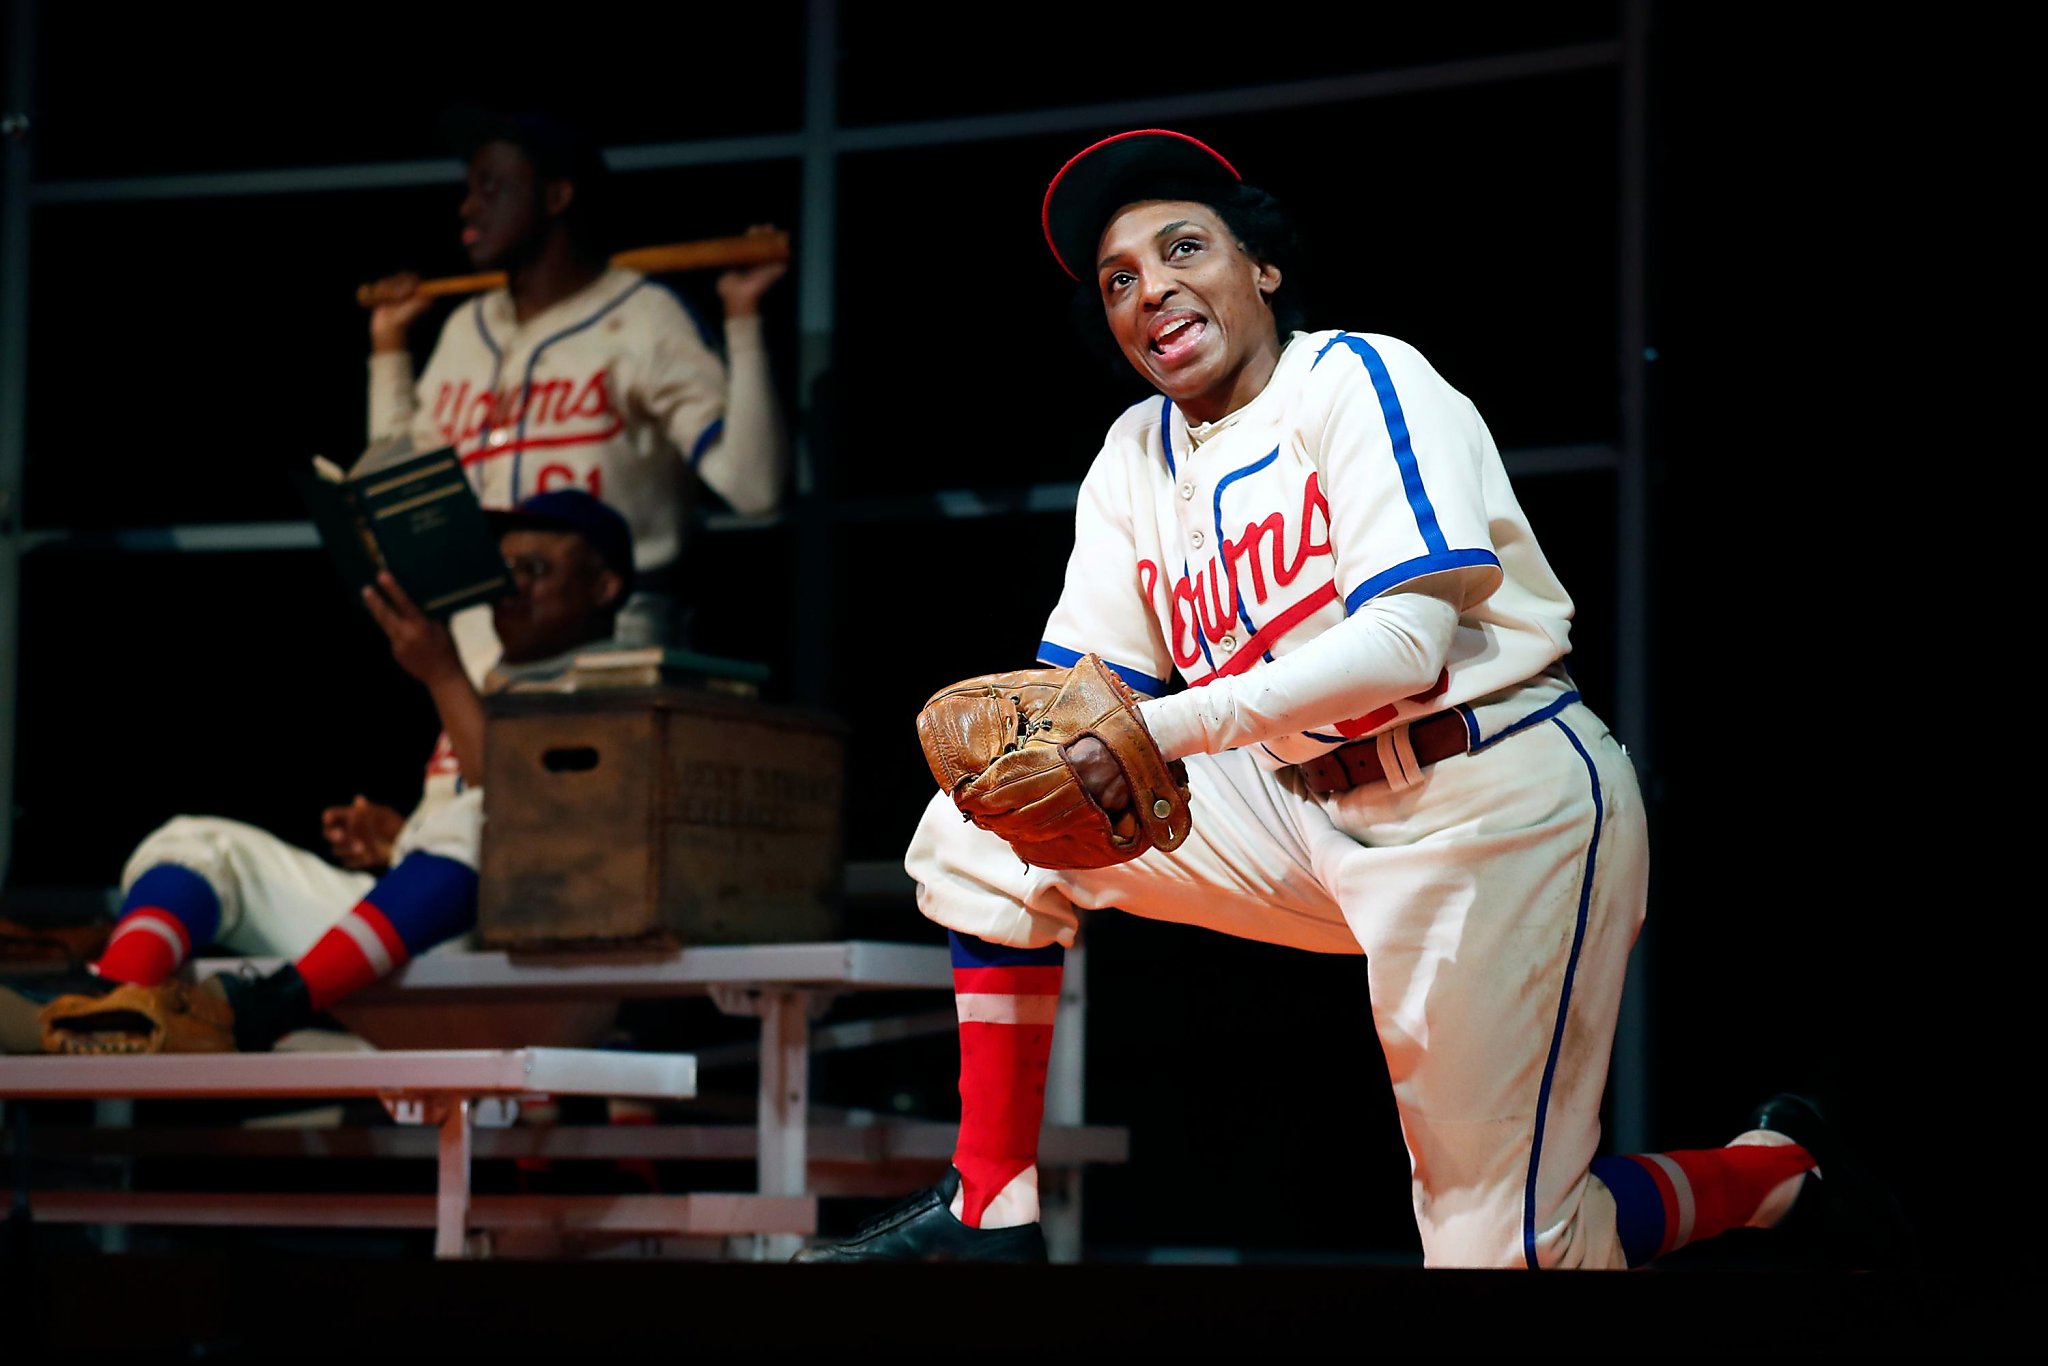 Google doodle honors Toni Stone, female pro baseball player